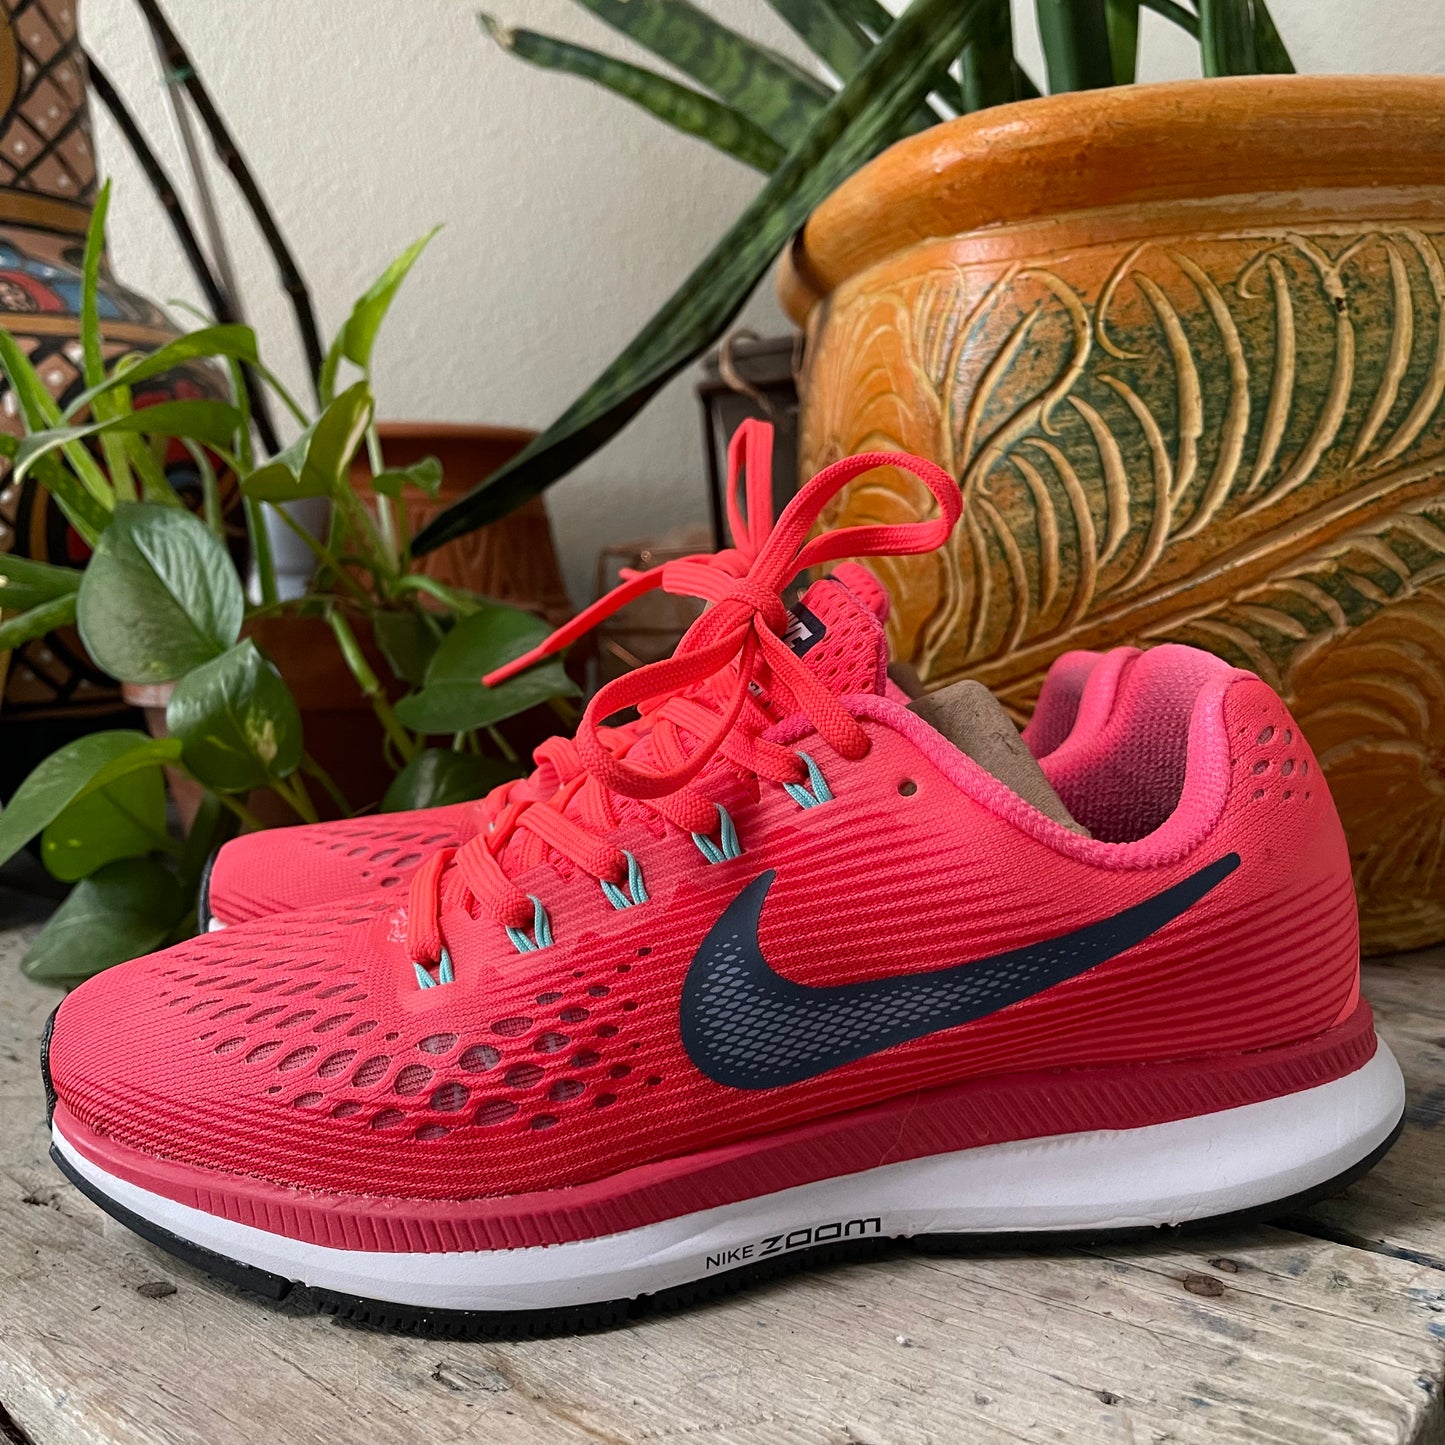 Nike Womens Air Zoom Pegasus 34 880560-602 Pink Running Shoes Sneakers Size 7.5